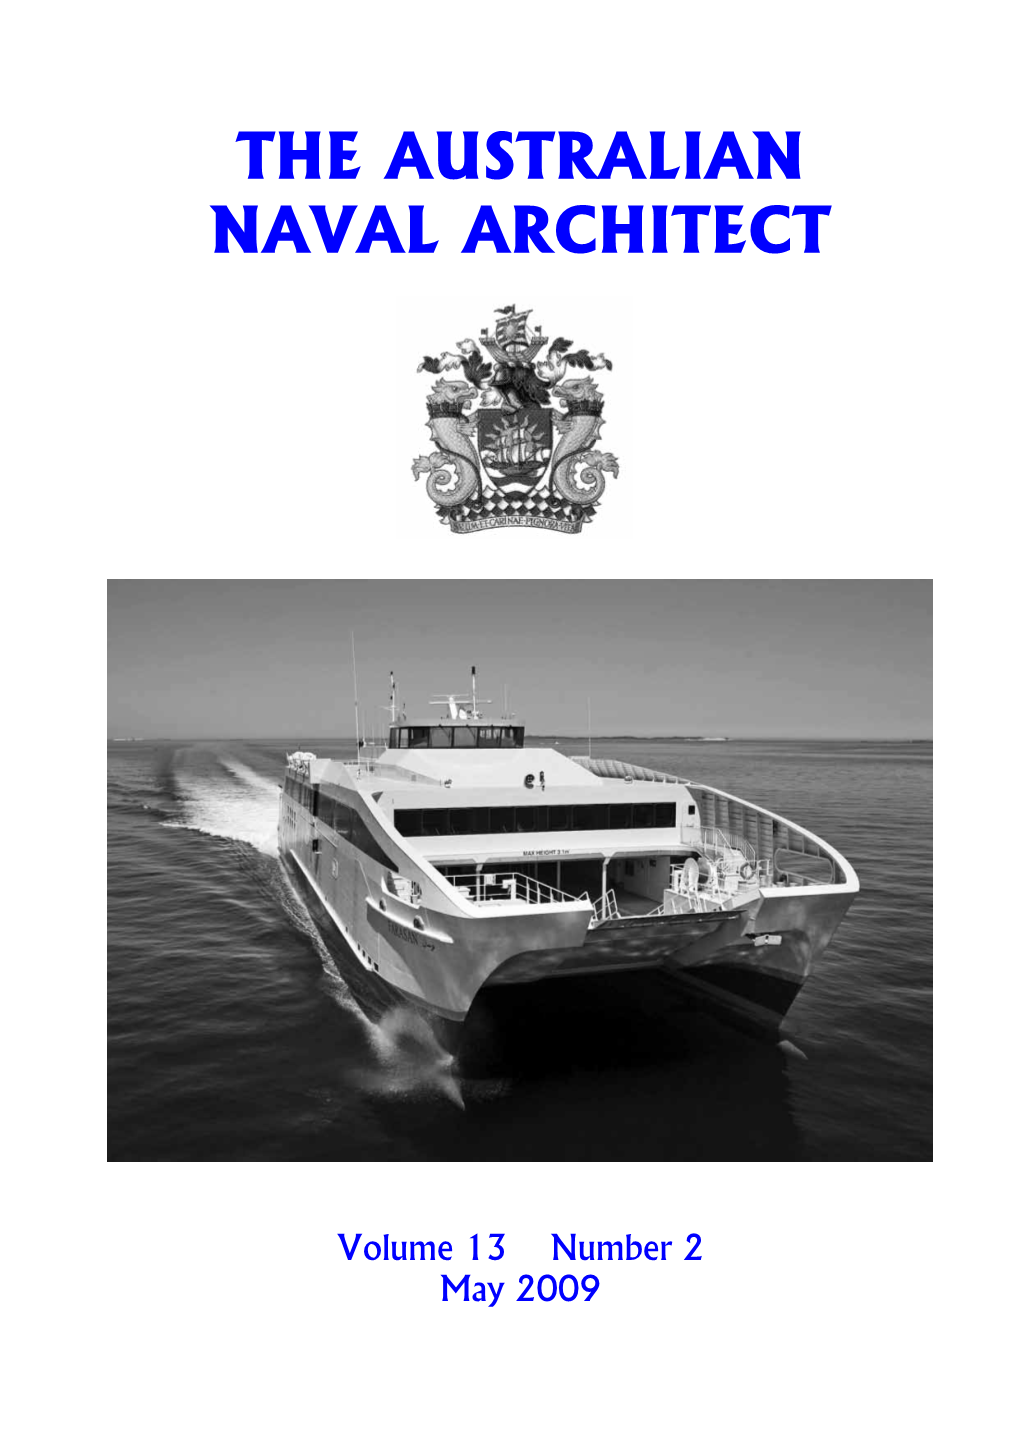 The Australian Naval Architect